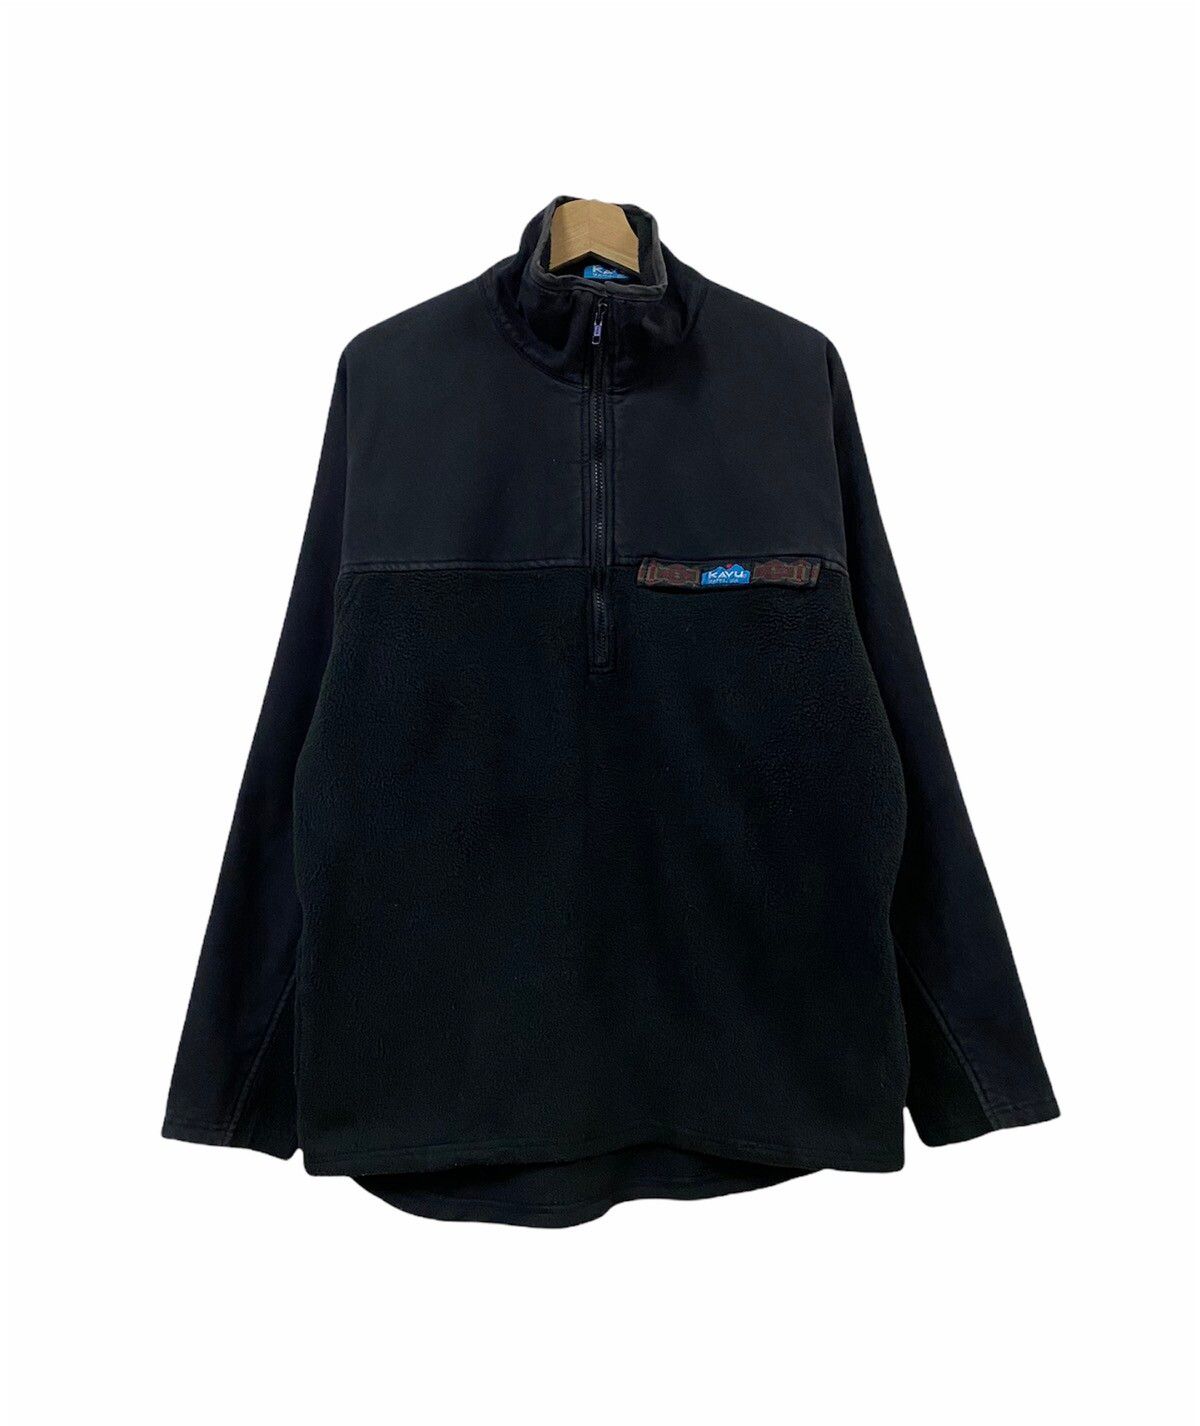 Vtg🔥Kavu Seattle Half Zipper Sportsman Outdoor Jacket Size M - 1